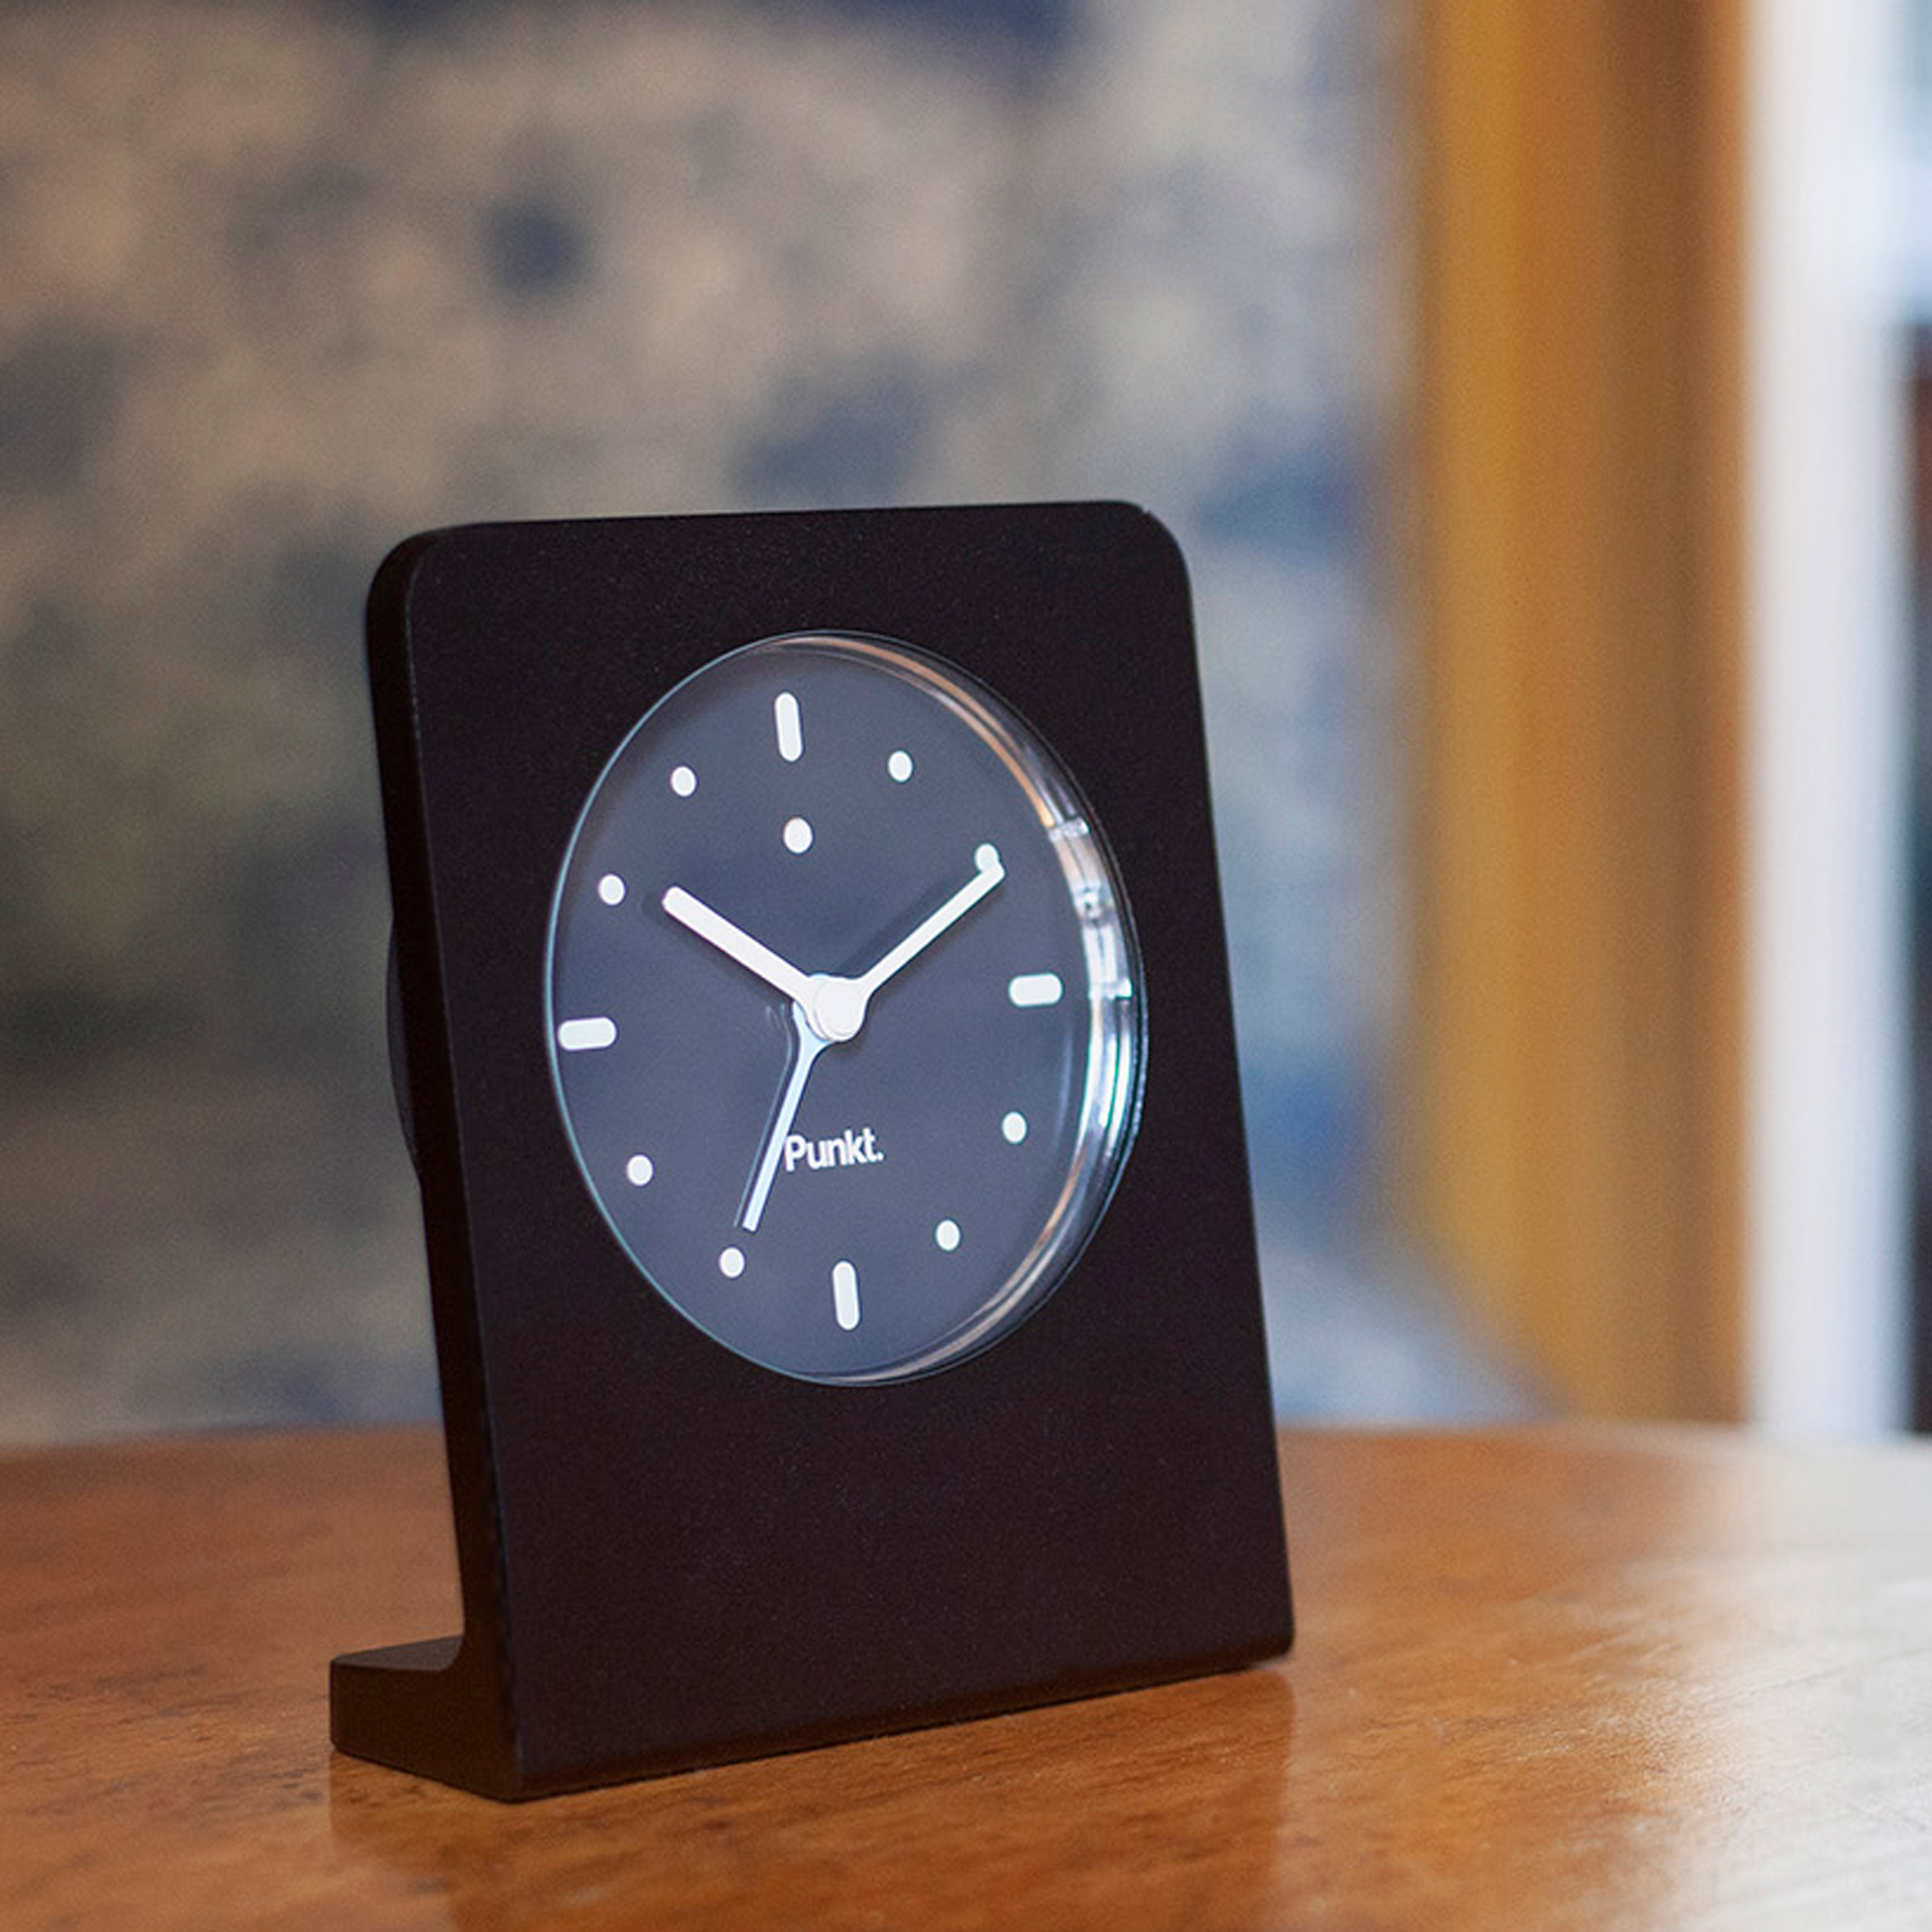 Waking up with Pavlok's wrist-shocking wearable alarm clock | TechCrunch